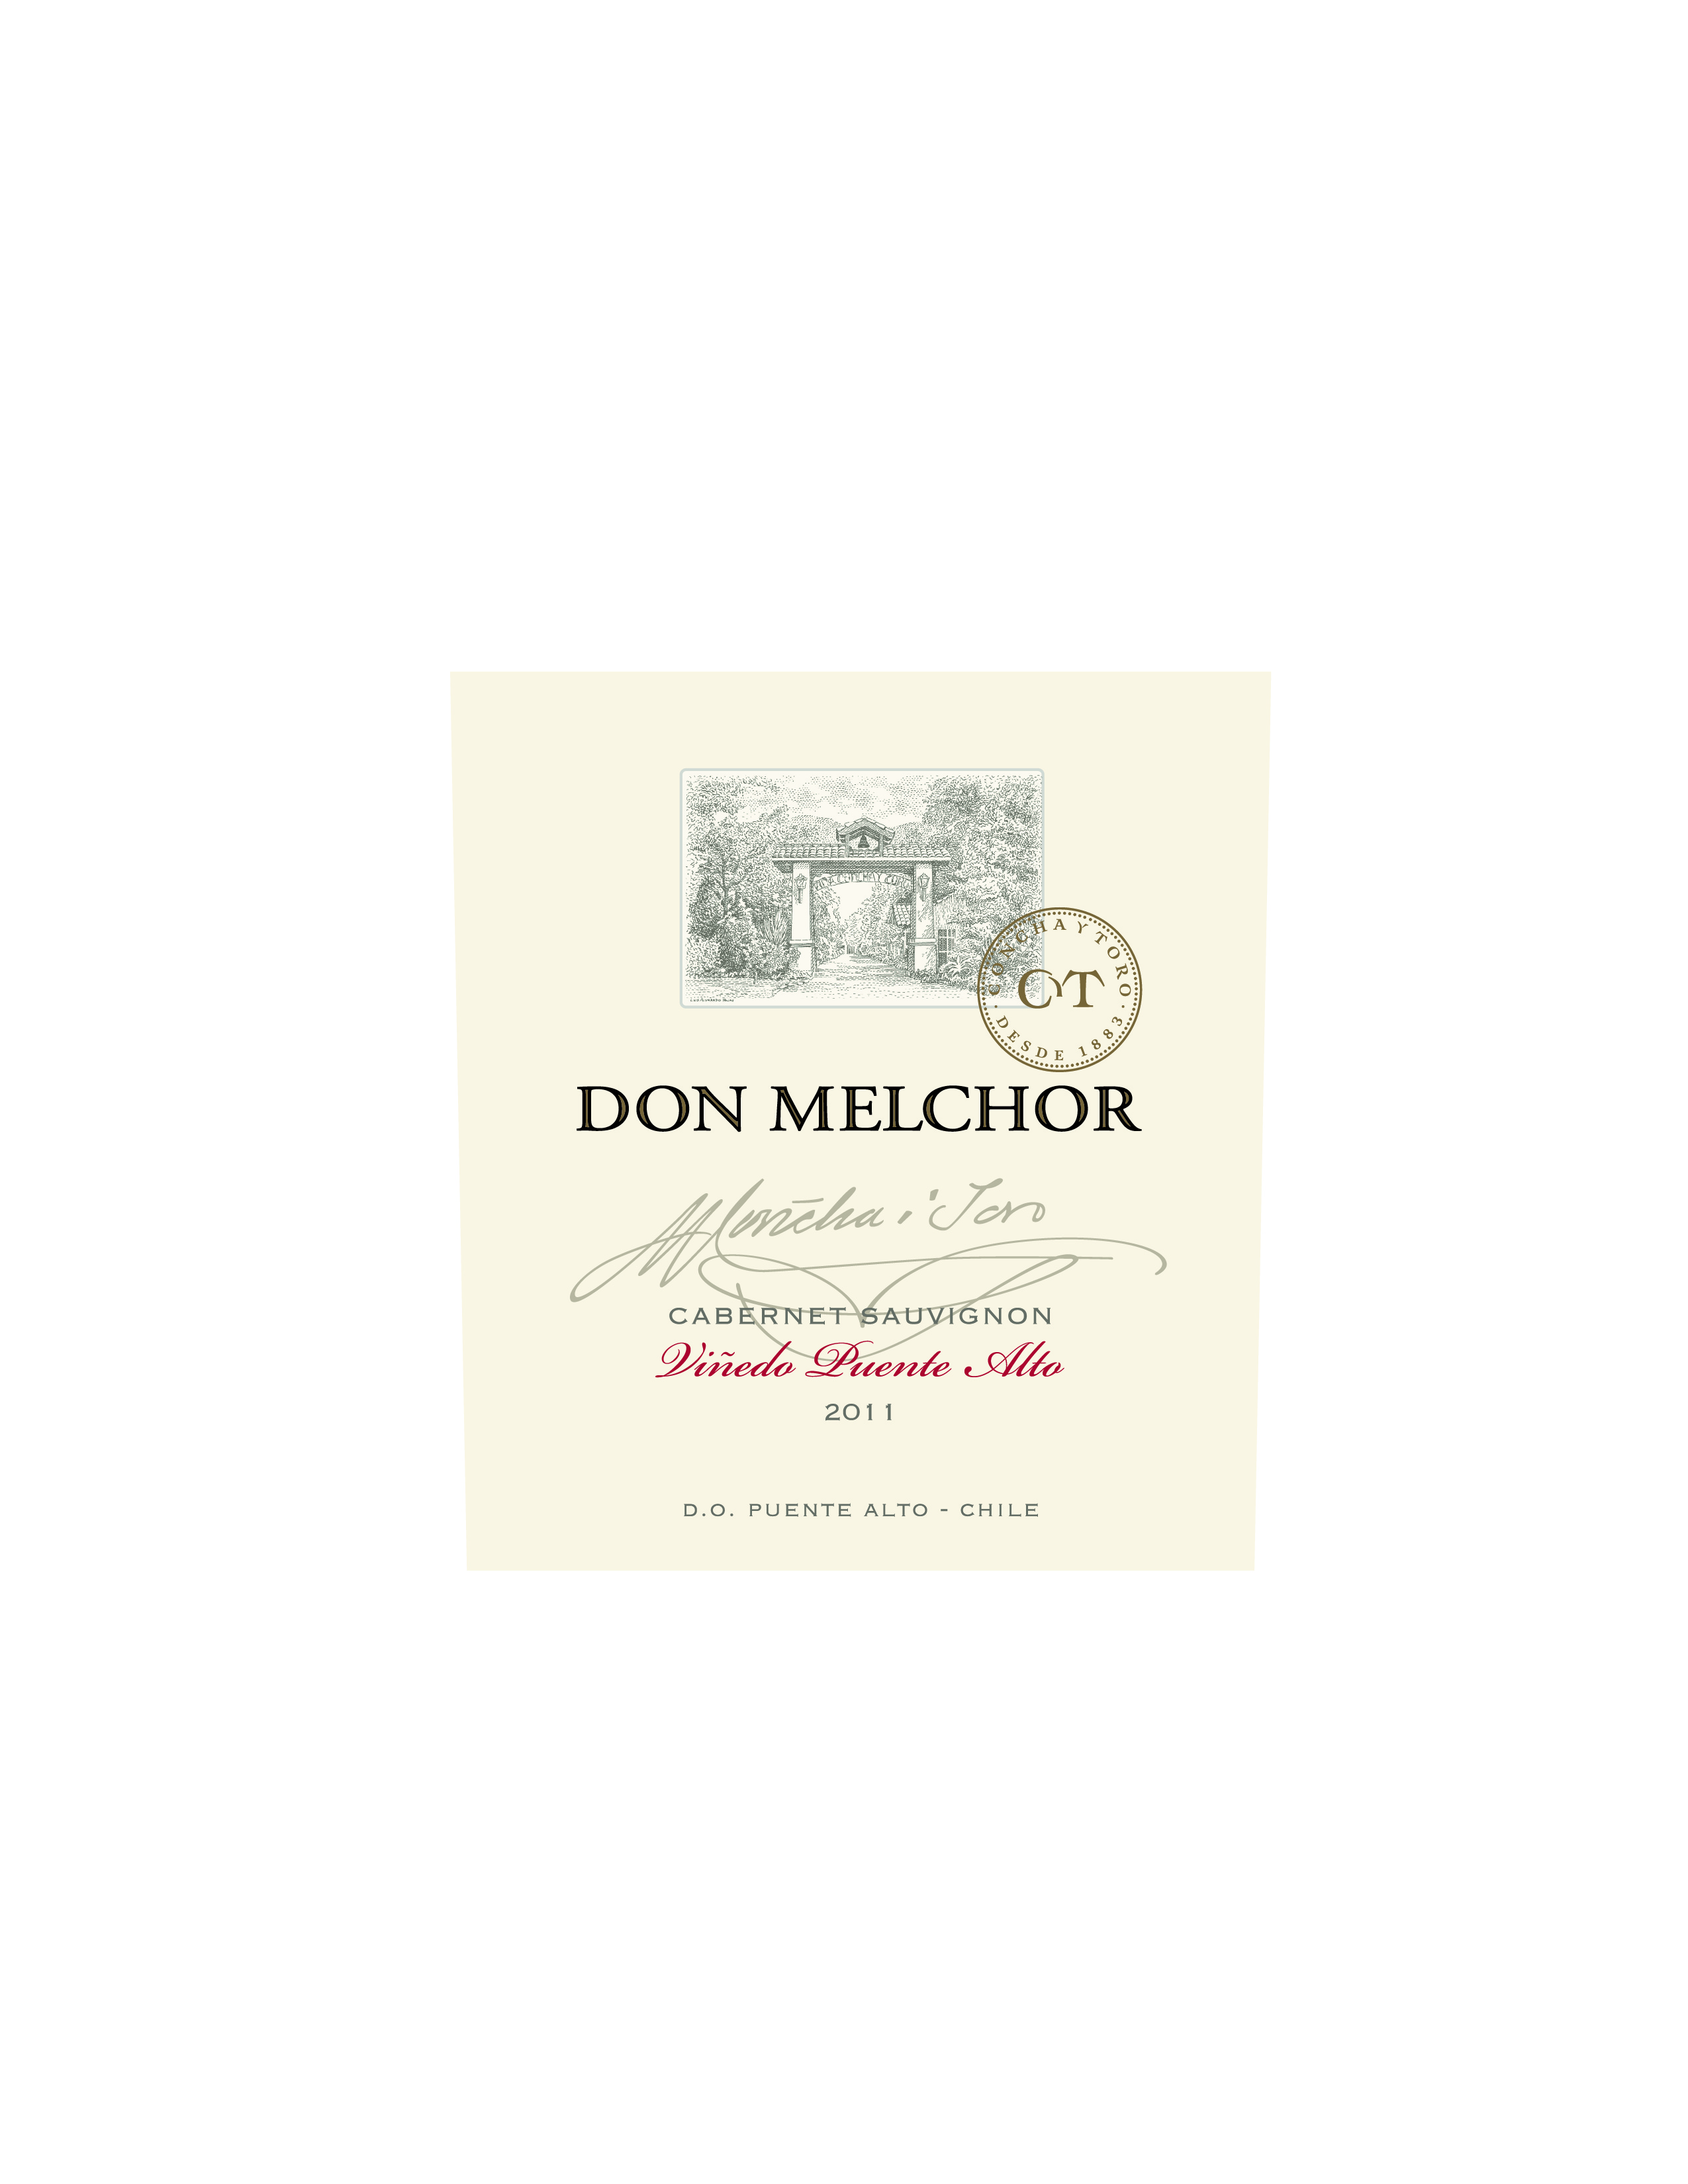 2016 Concha y Toro Don Melchor Cabernet Sauvignon, Puente Alto, Chile image